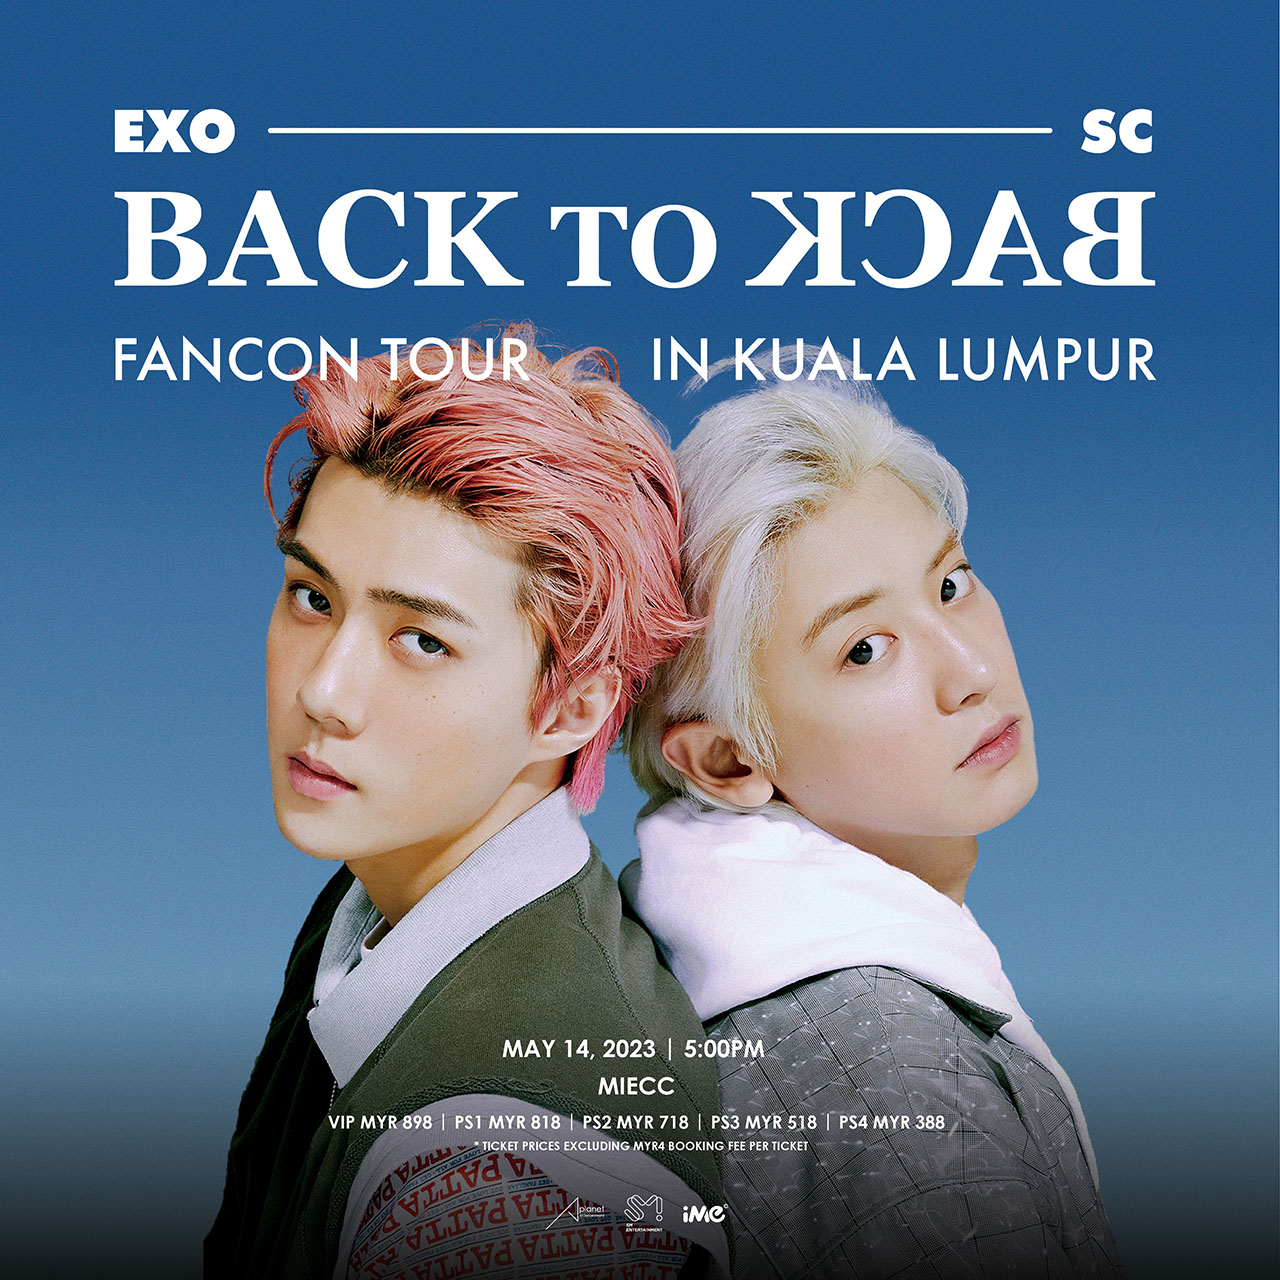 EXO-SC BACK TO BACK FANCON TOUR arrives in Kuala Lumpur!